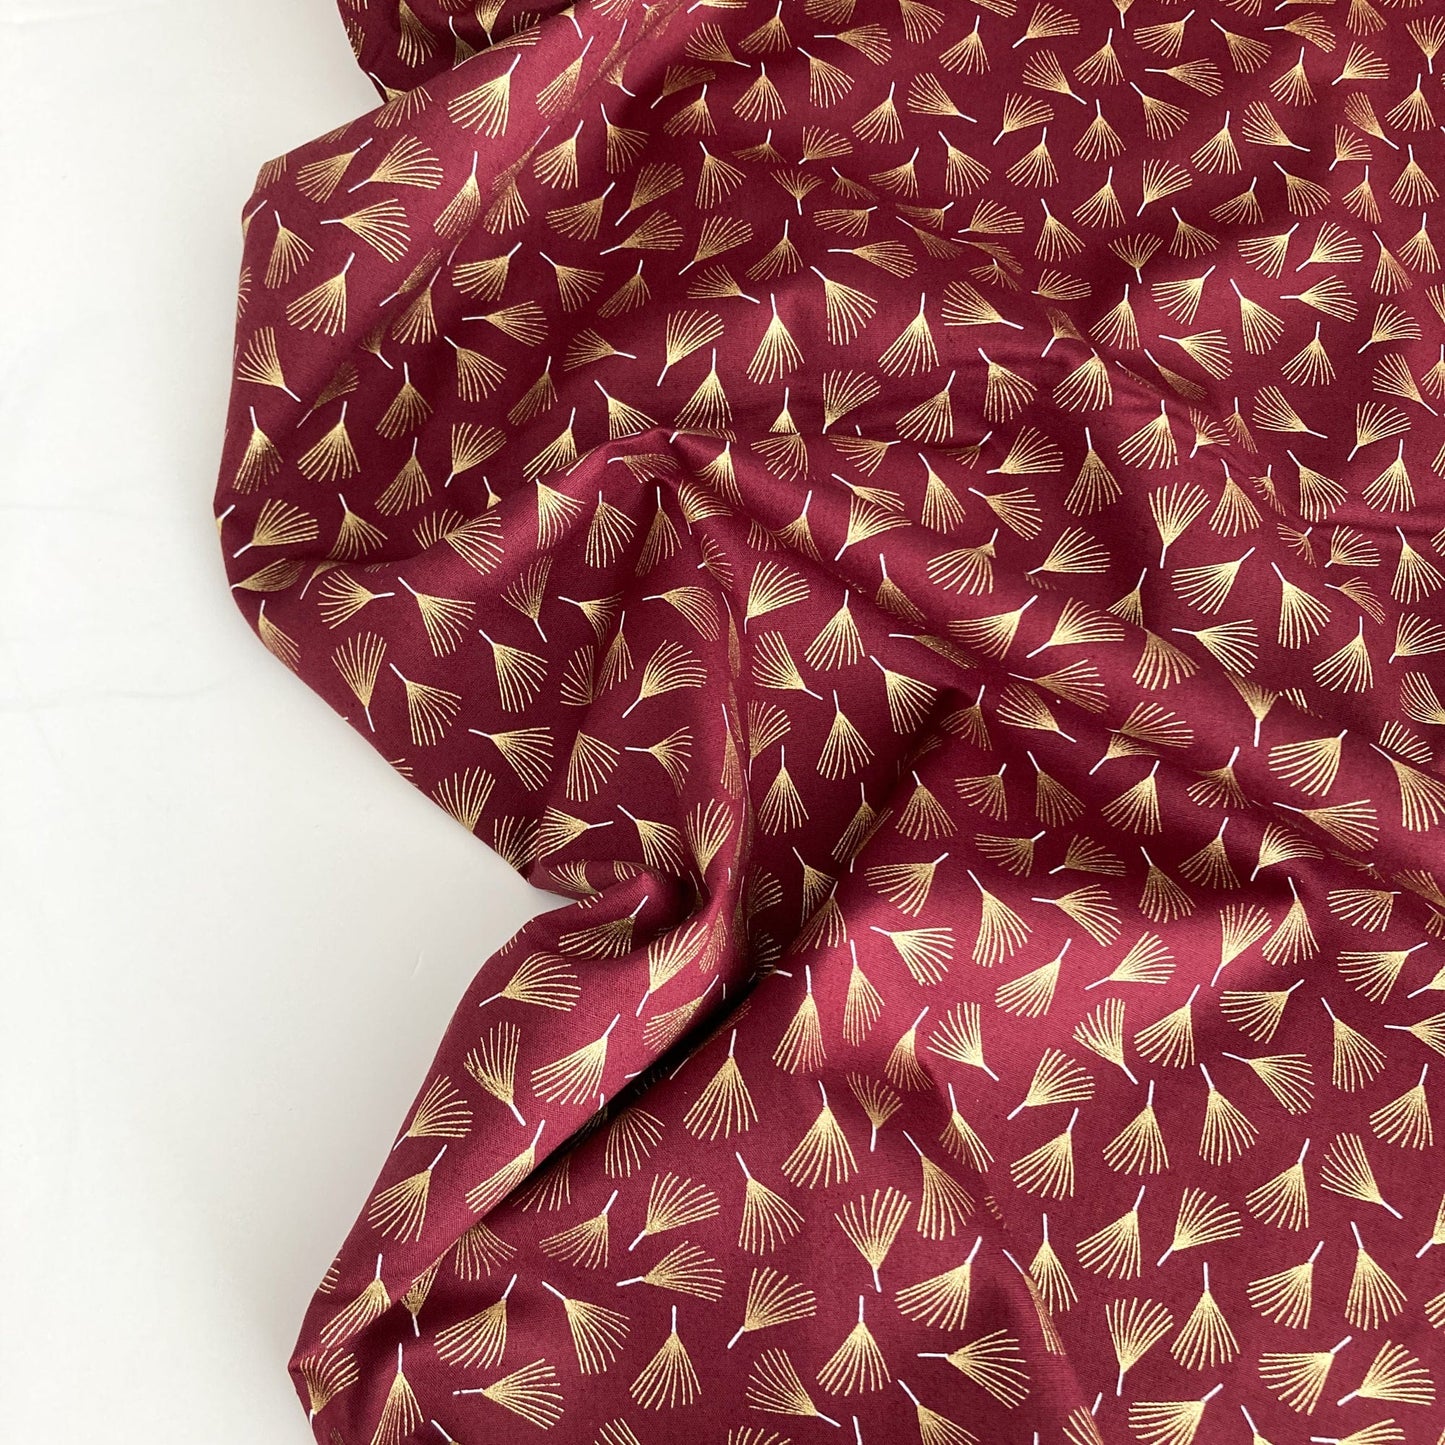 Cotton Fabric in Burgundy with Metallic Pine Leaf Print